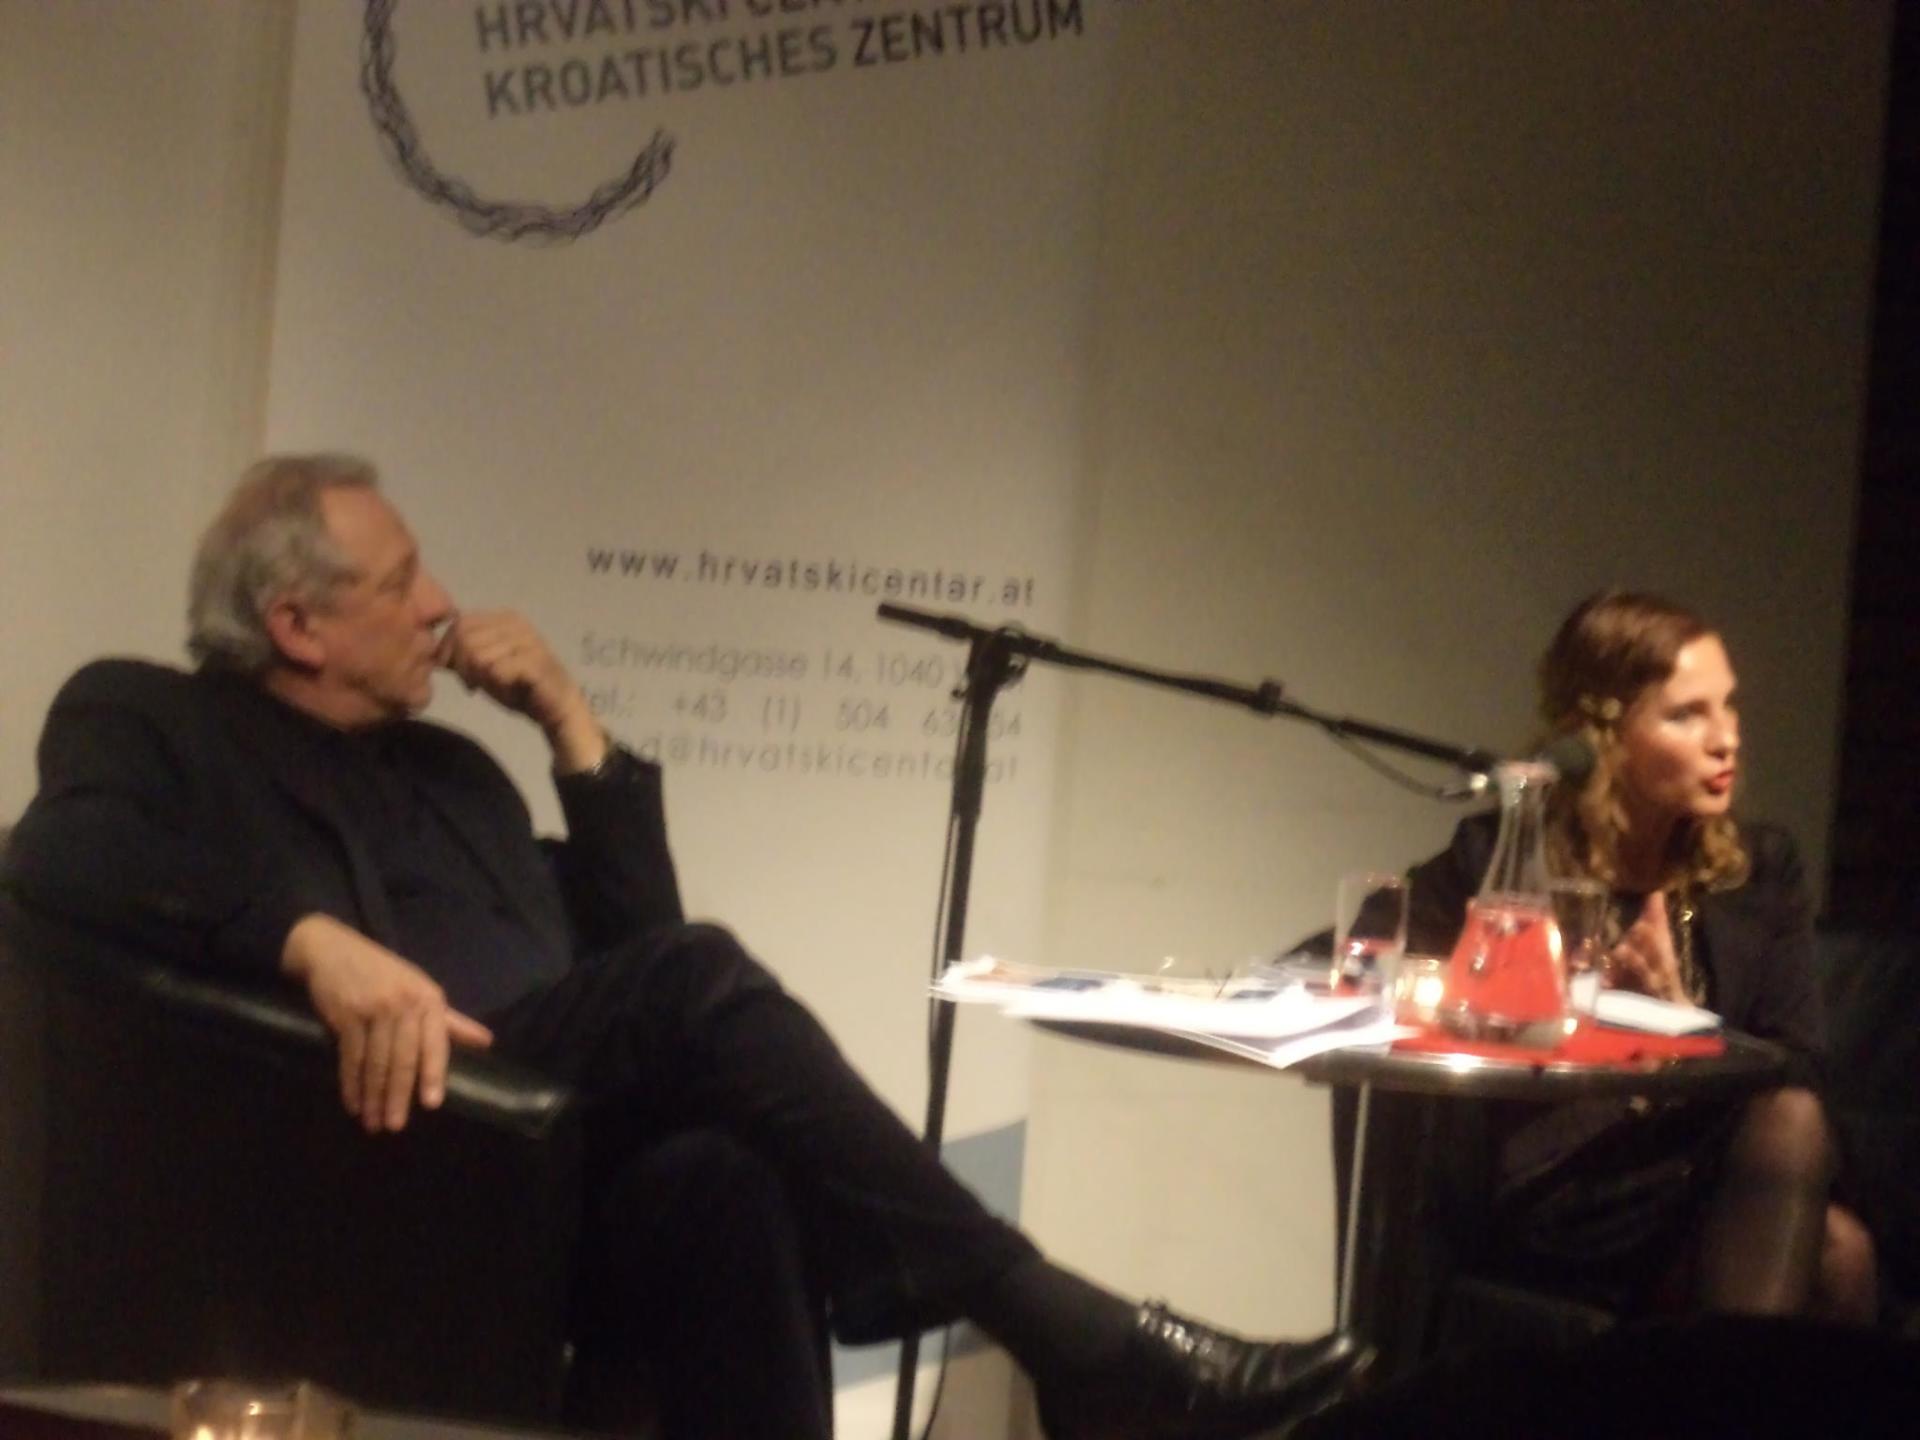 Goost u centru: Tatjana Christelbauer in Talk with croatian journalist Mr.Petar tyran on Art Identity, cultural Diplomacy and sense of belonging